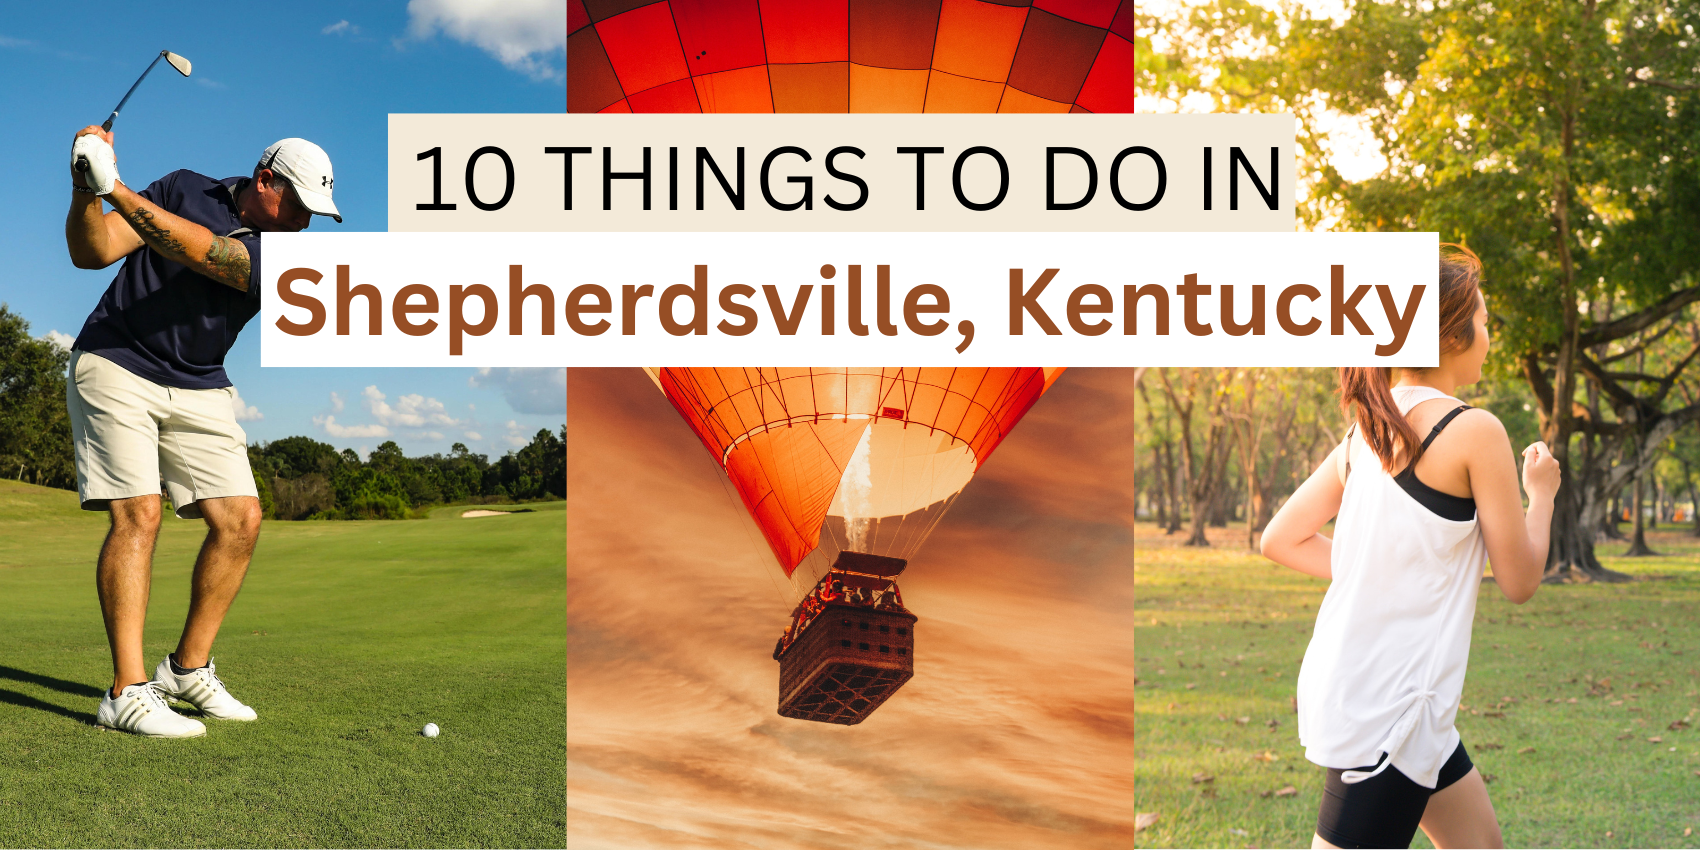 10 Things To Do In Shepherdsville, Kentucky!